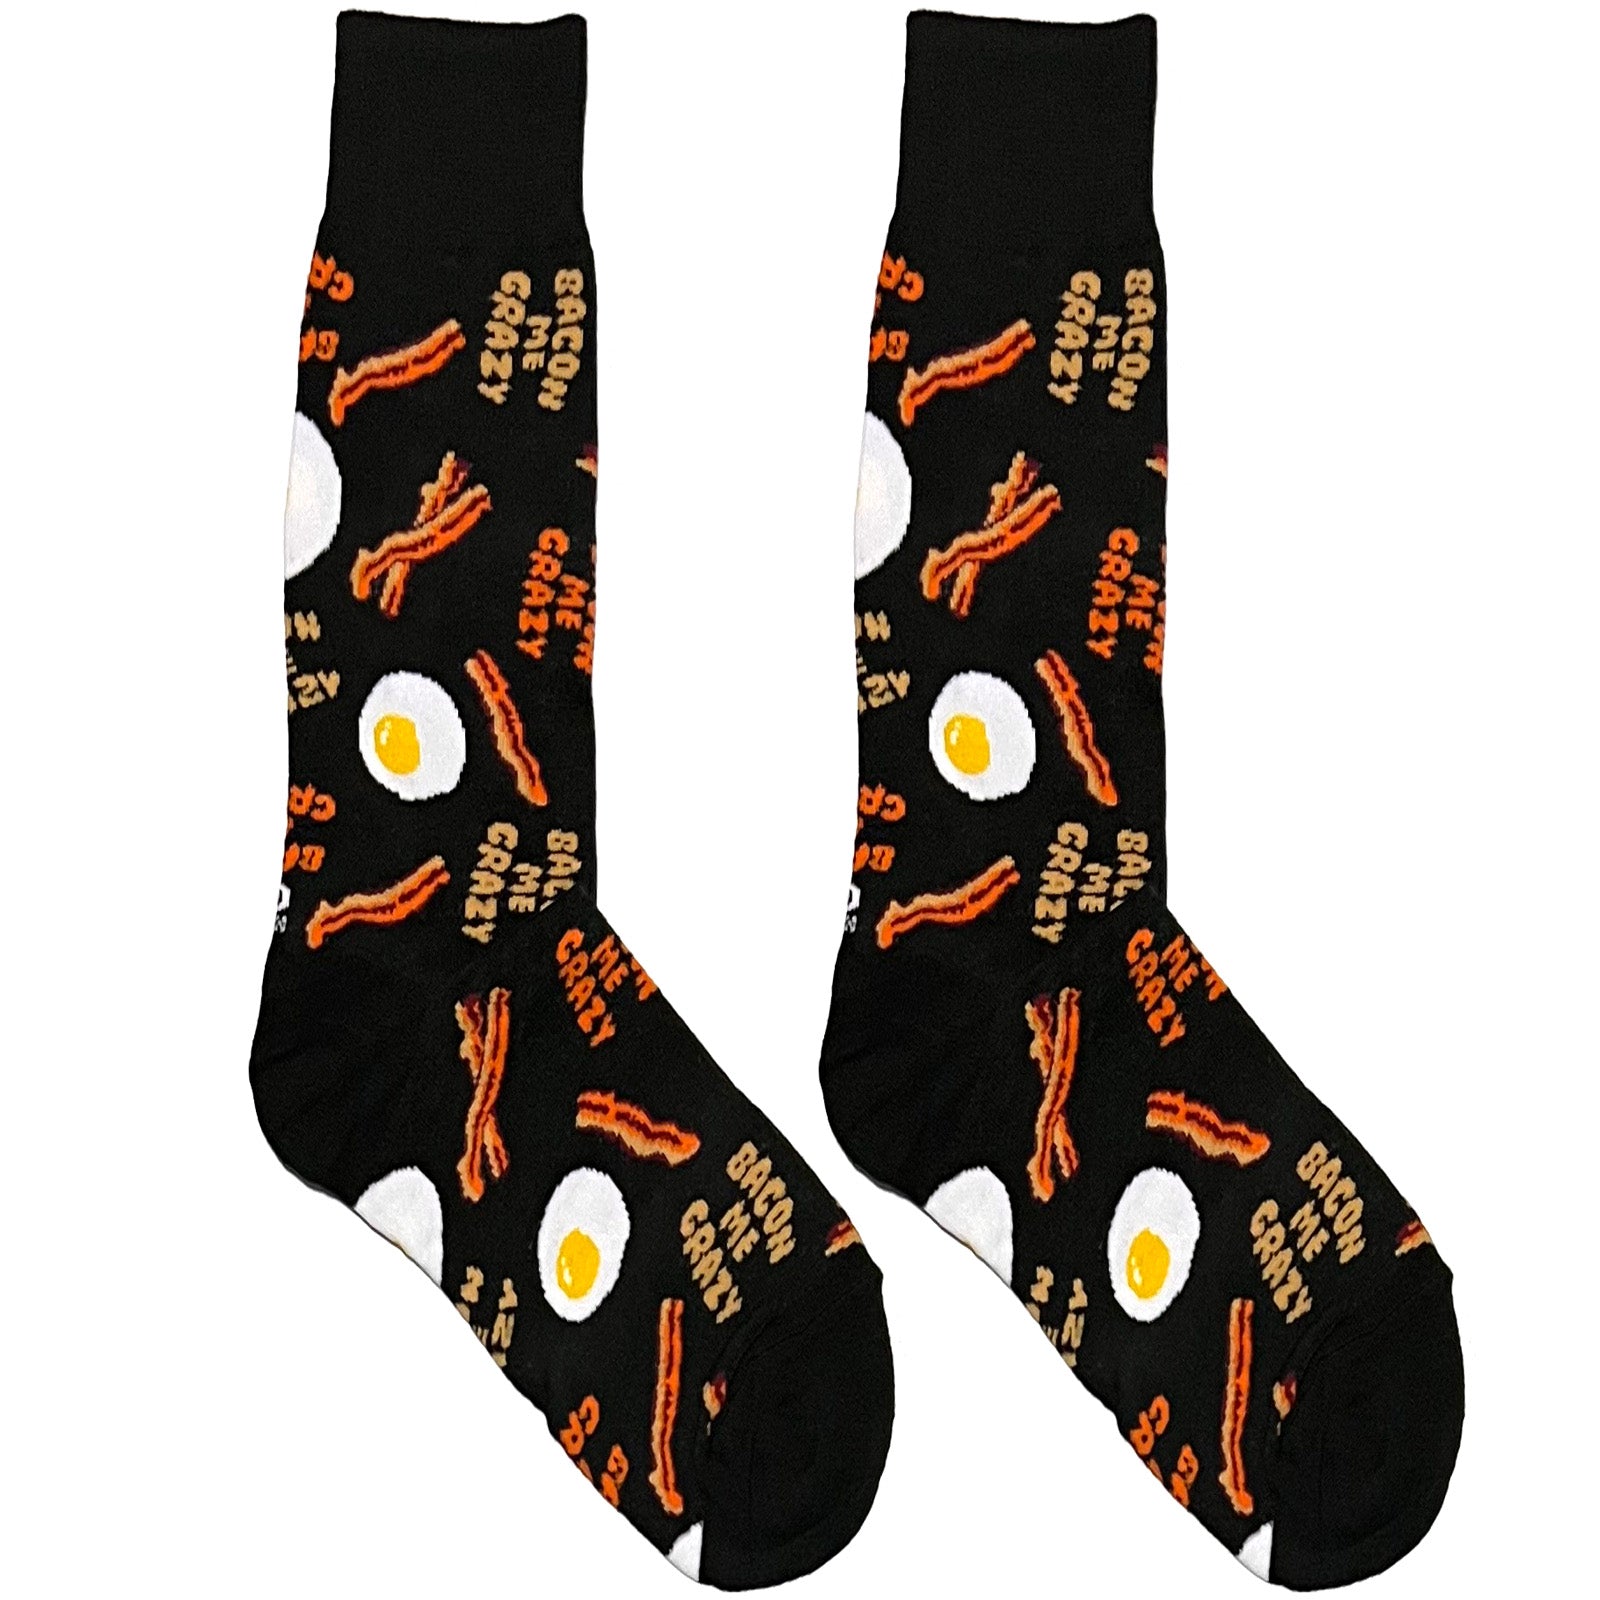 Black Egg And Bacon Socks